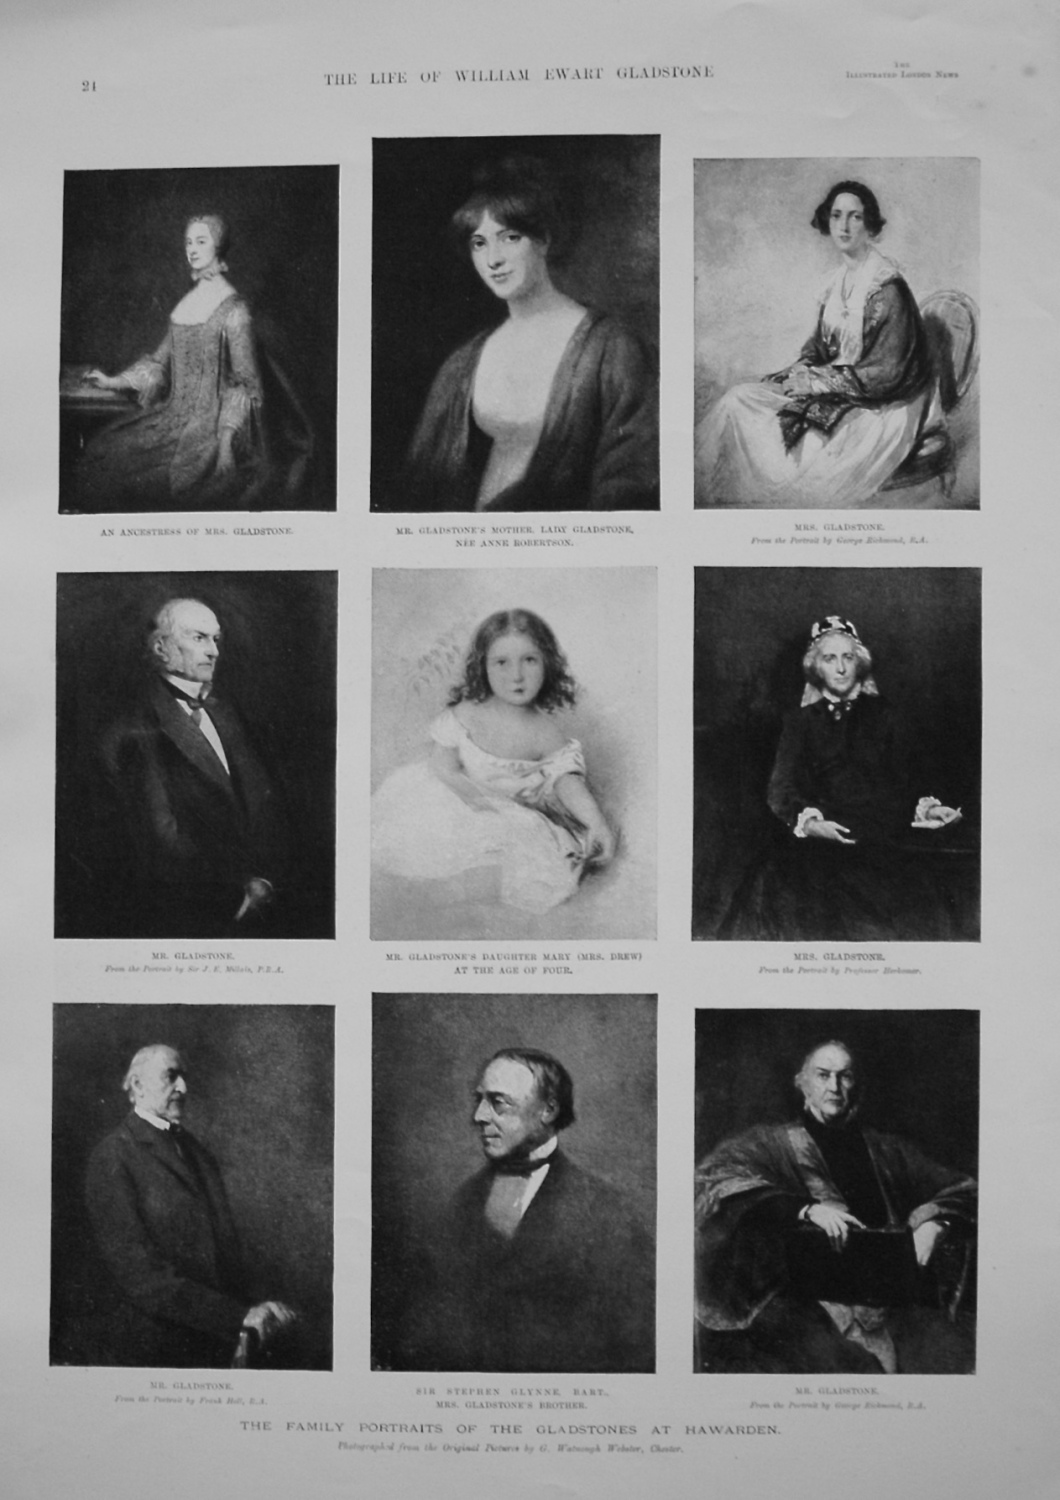 Family Portraits of the Gladstones at Hawarden.